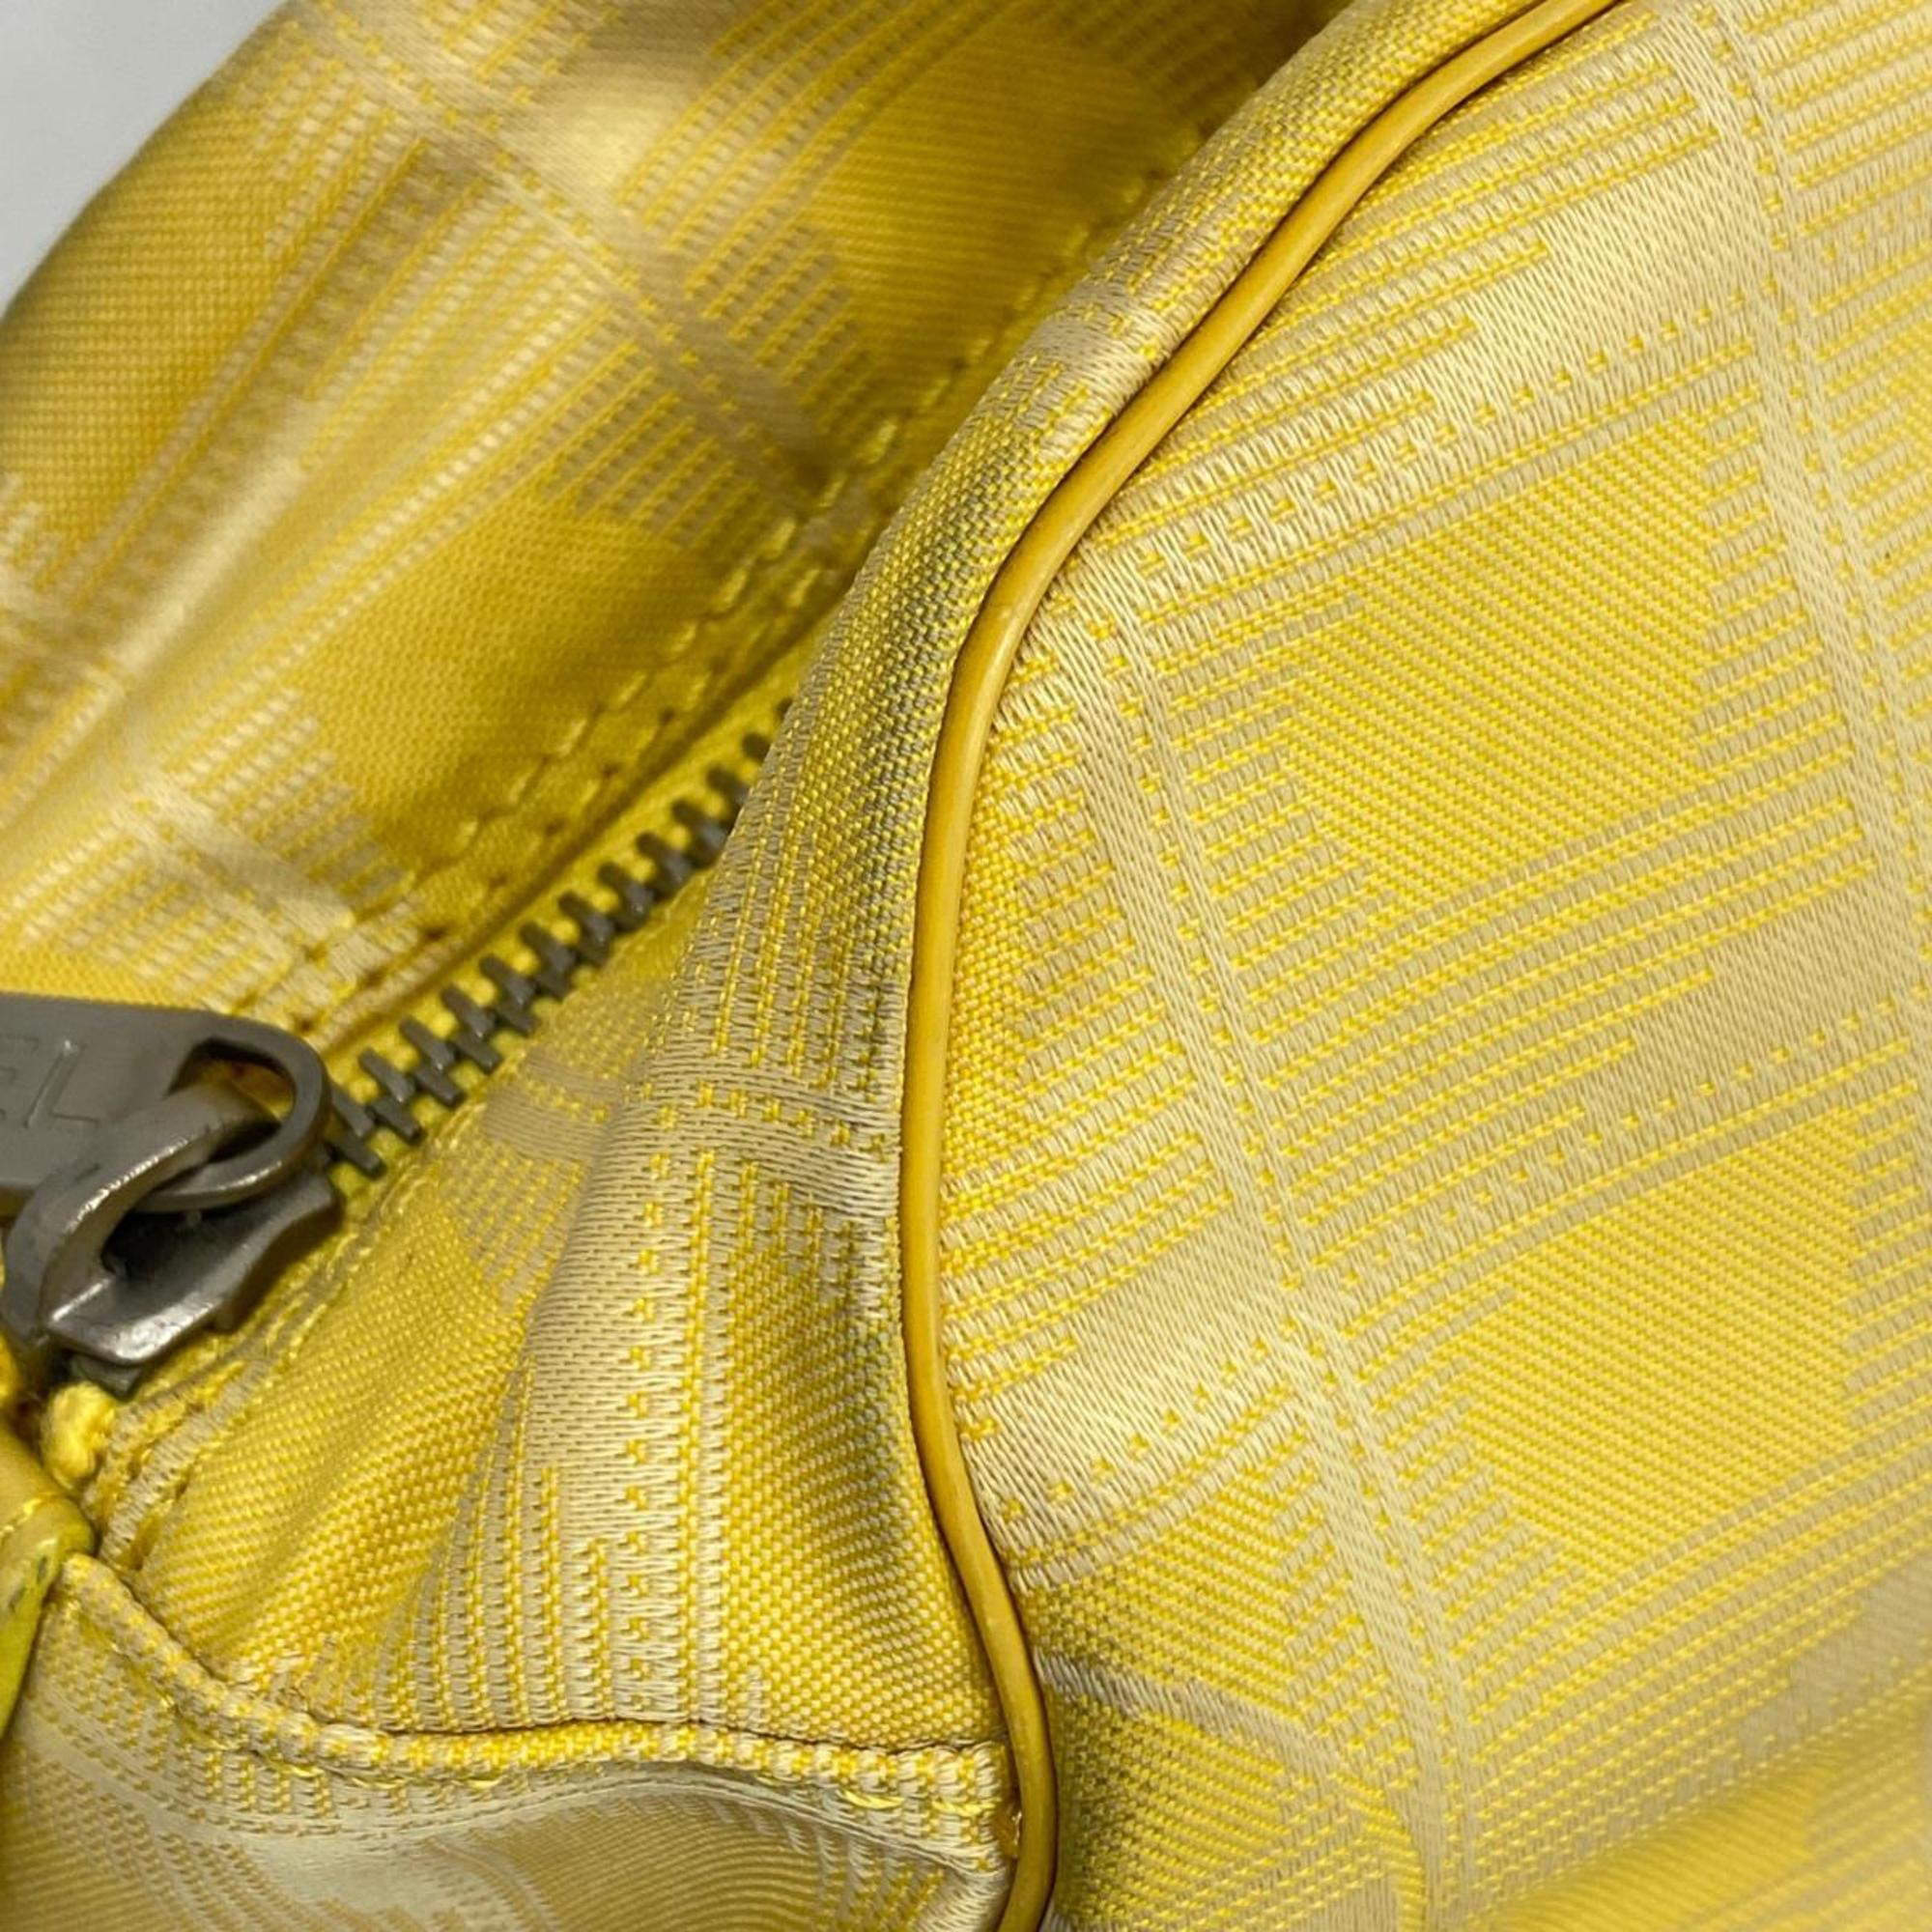 Chanel handbag New Travel Nylon Yellow Champagne Ladies